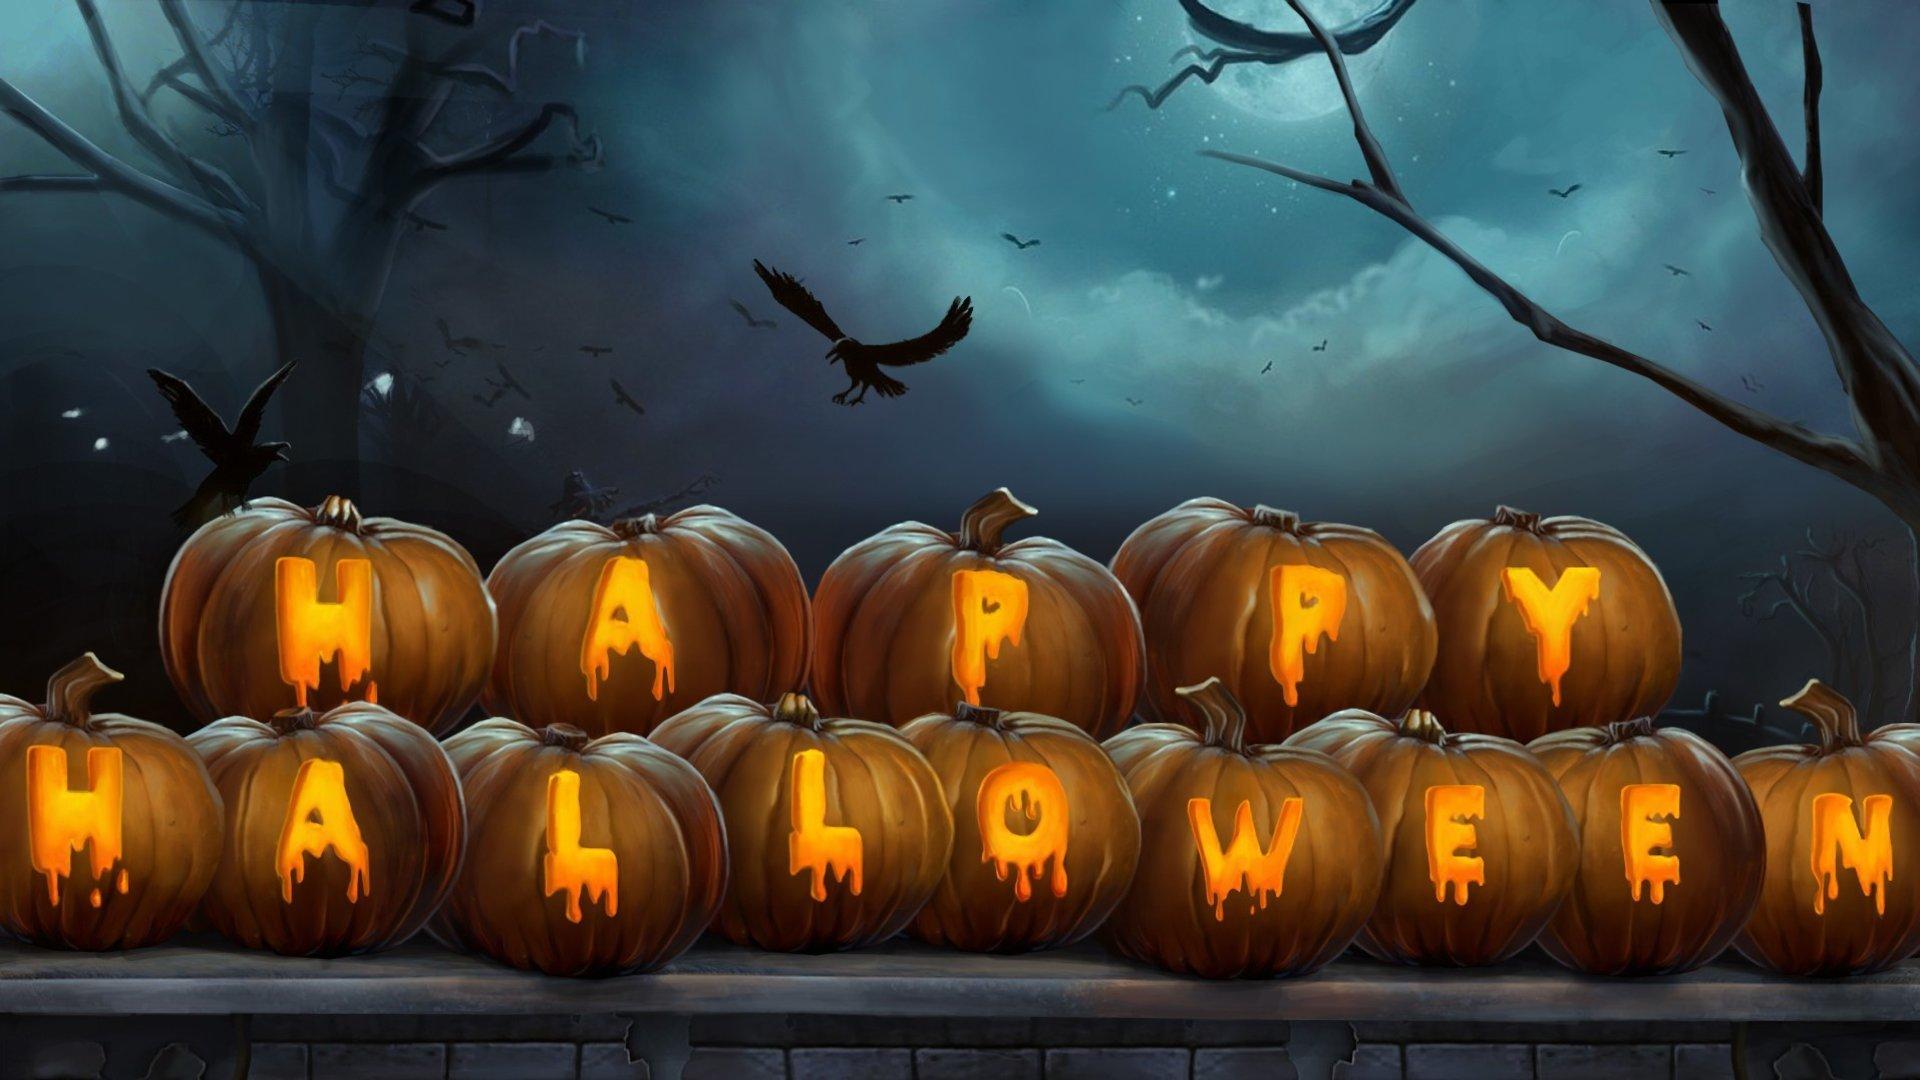 Halloween wallpaper HD for desktop background